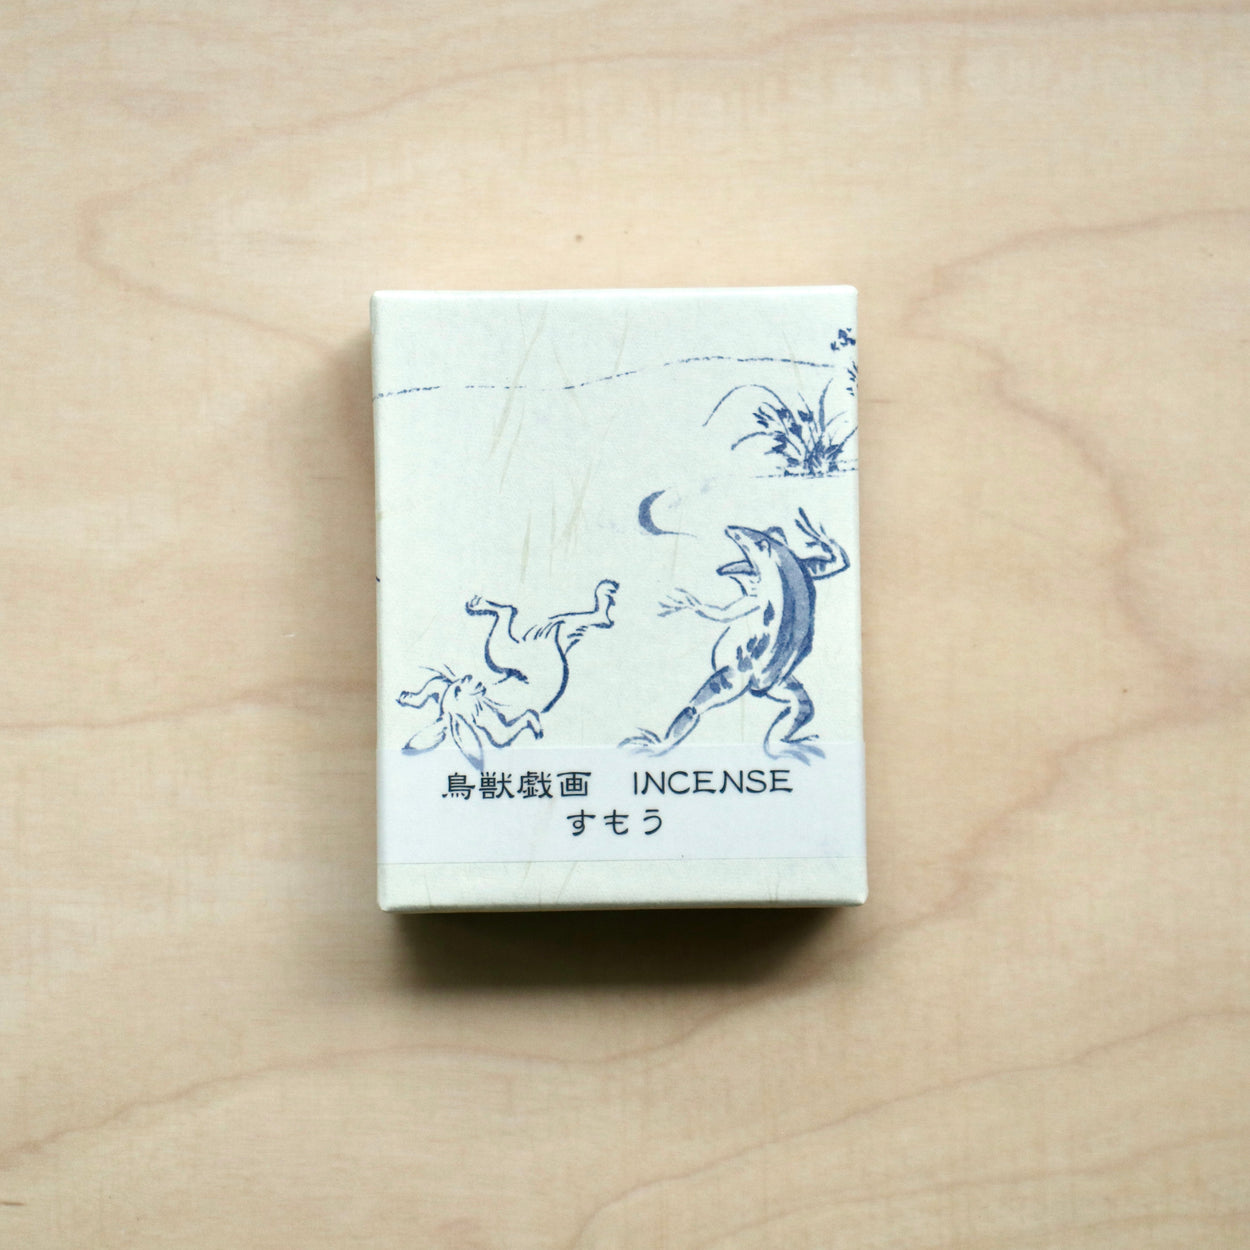 Japanese Incense Sticks box- Sumo on pale wood backdrop.